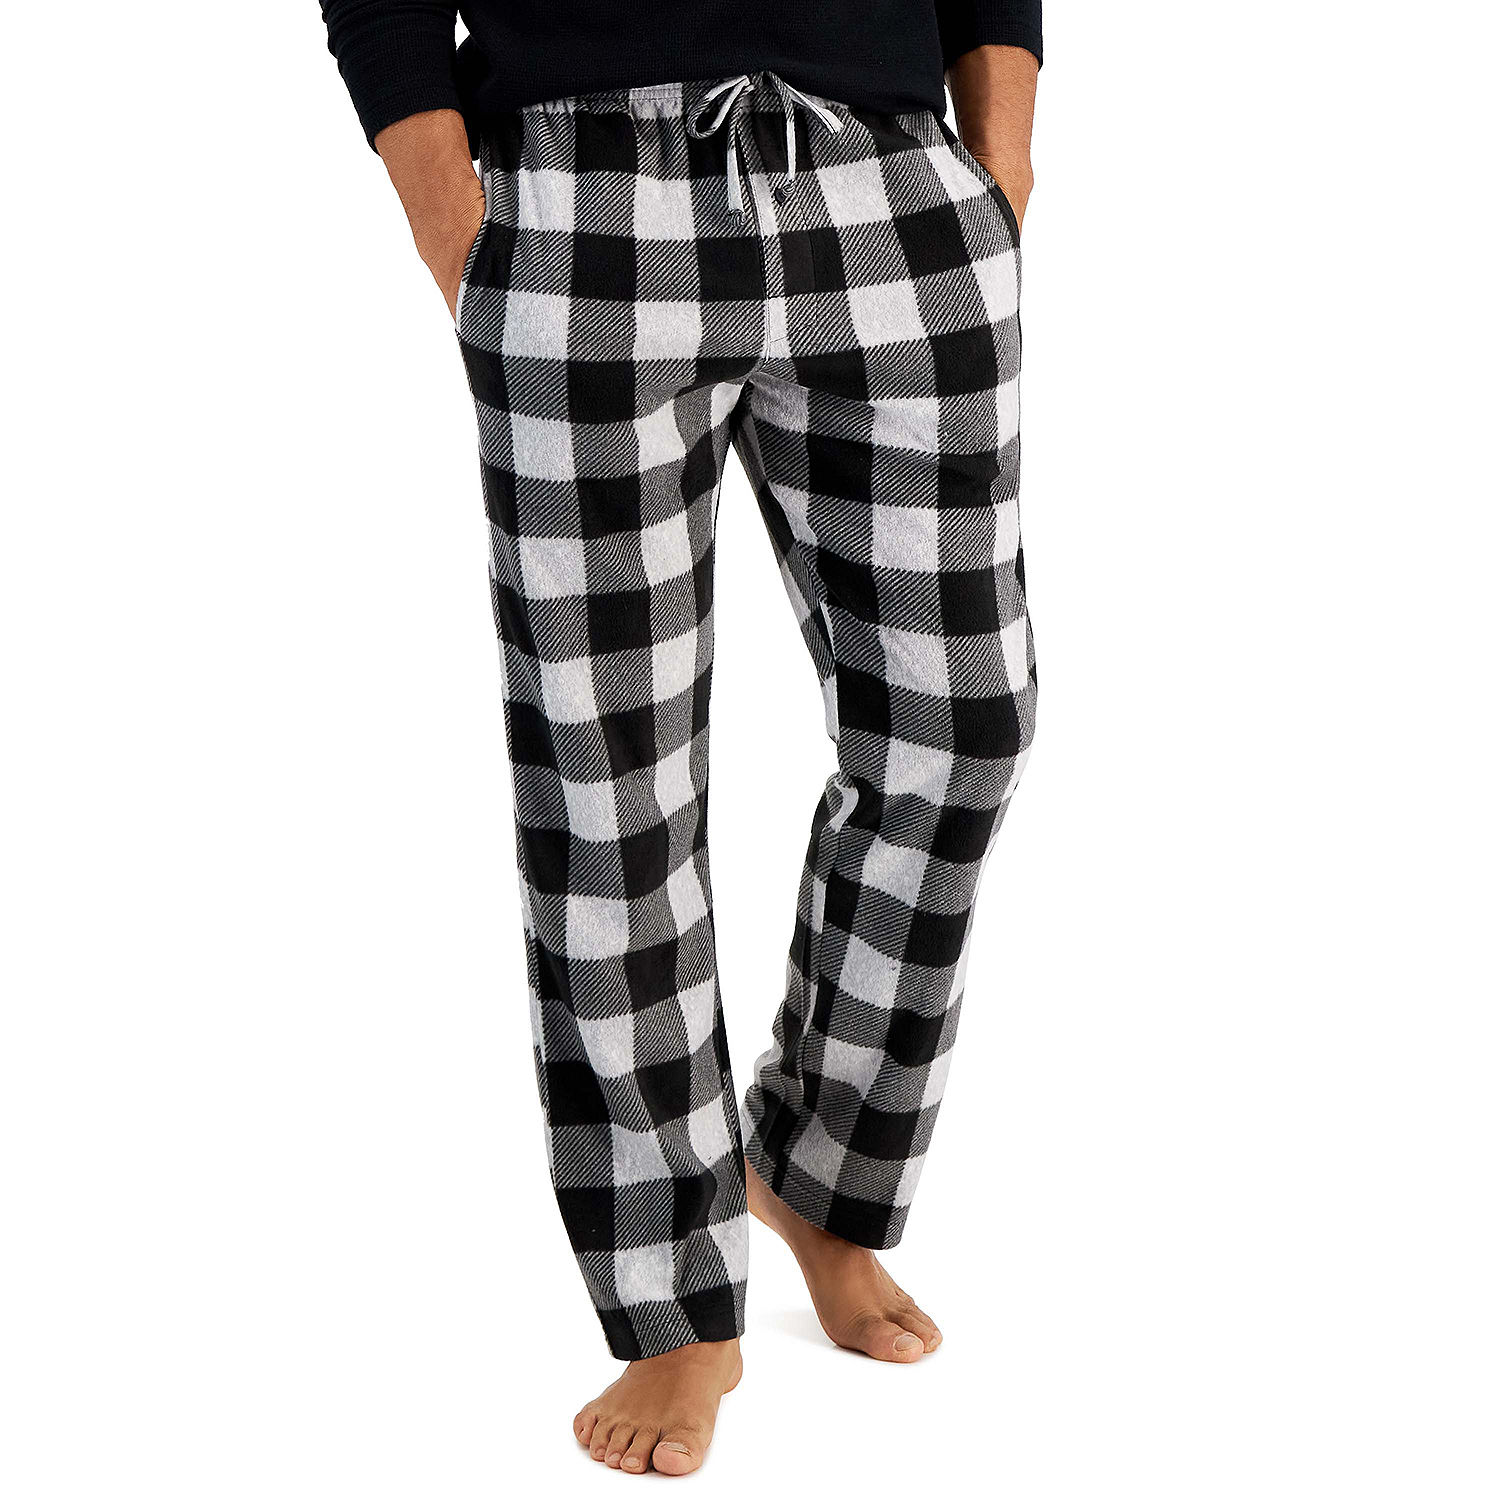 Hanes Mens Big and Tall Pajama Pants, Color: Gray Buffalo Check - JCPenney